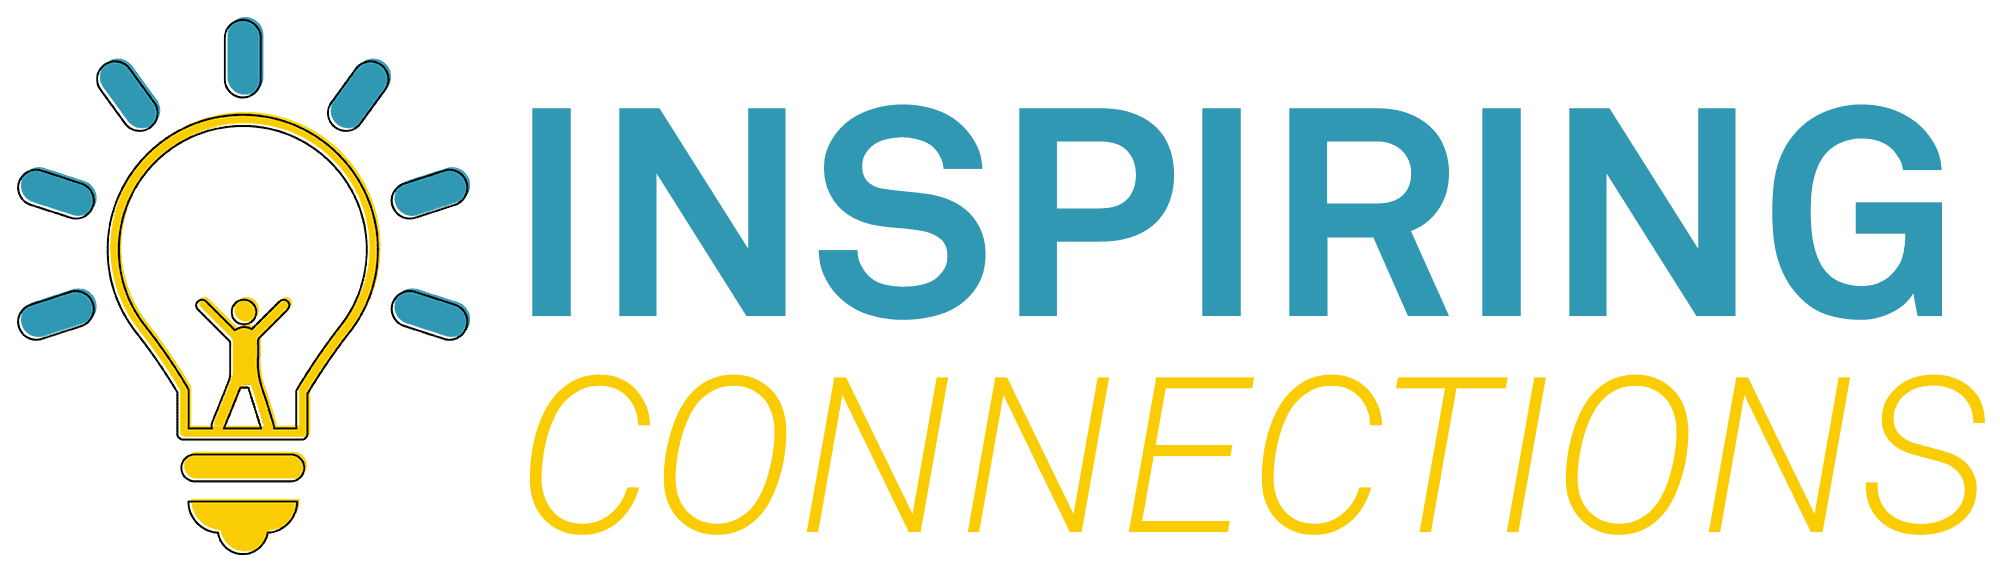 Inspiring Connections service logo